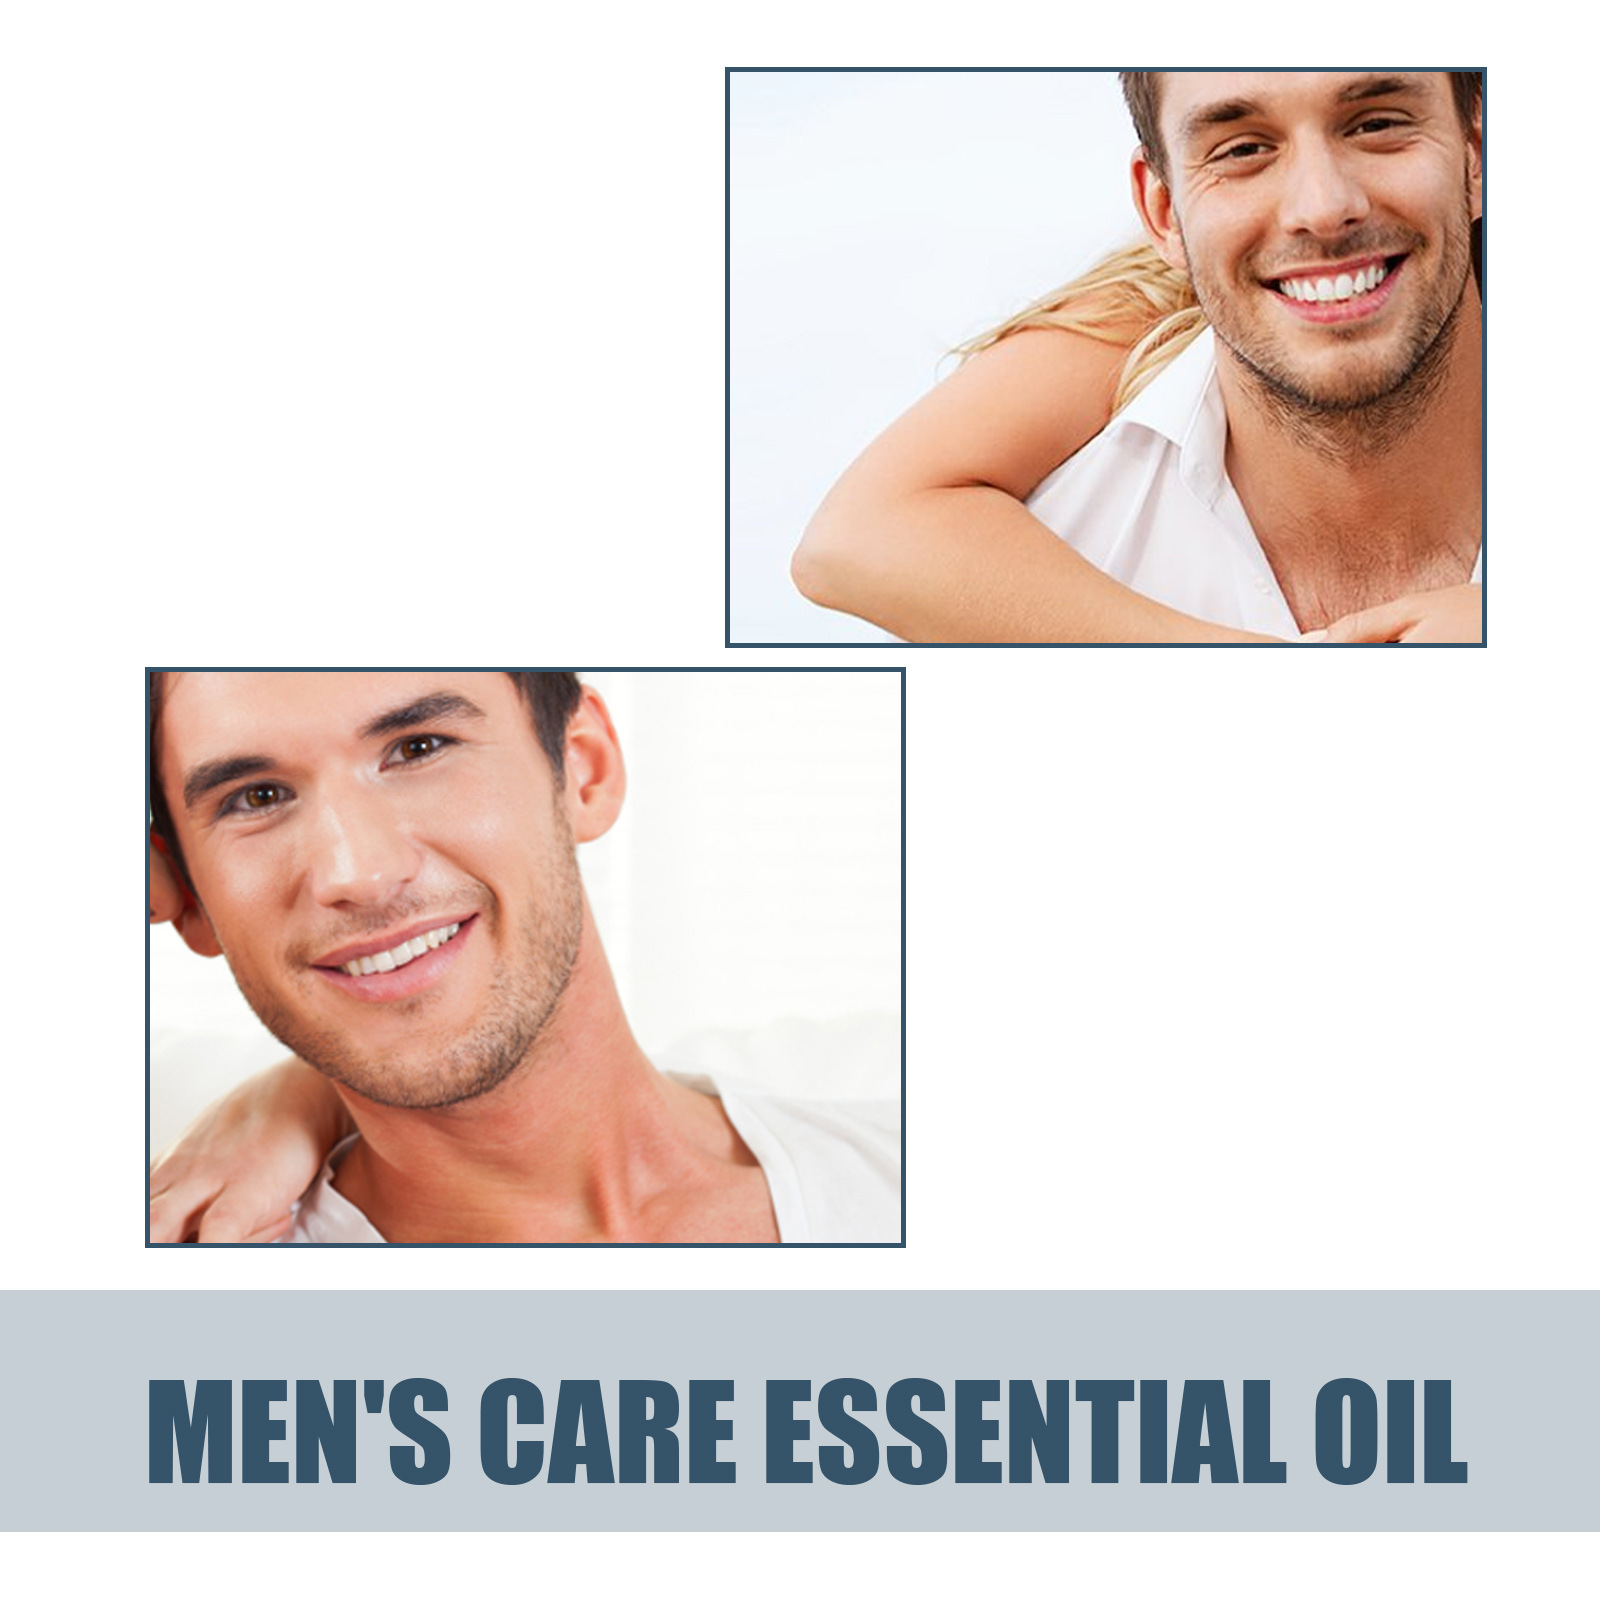 North Moon Men's Care Essential Oil Men's Body Care Essential Oil Temple Massage Care Essential Oil